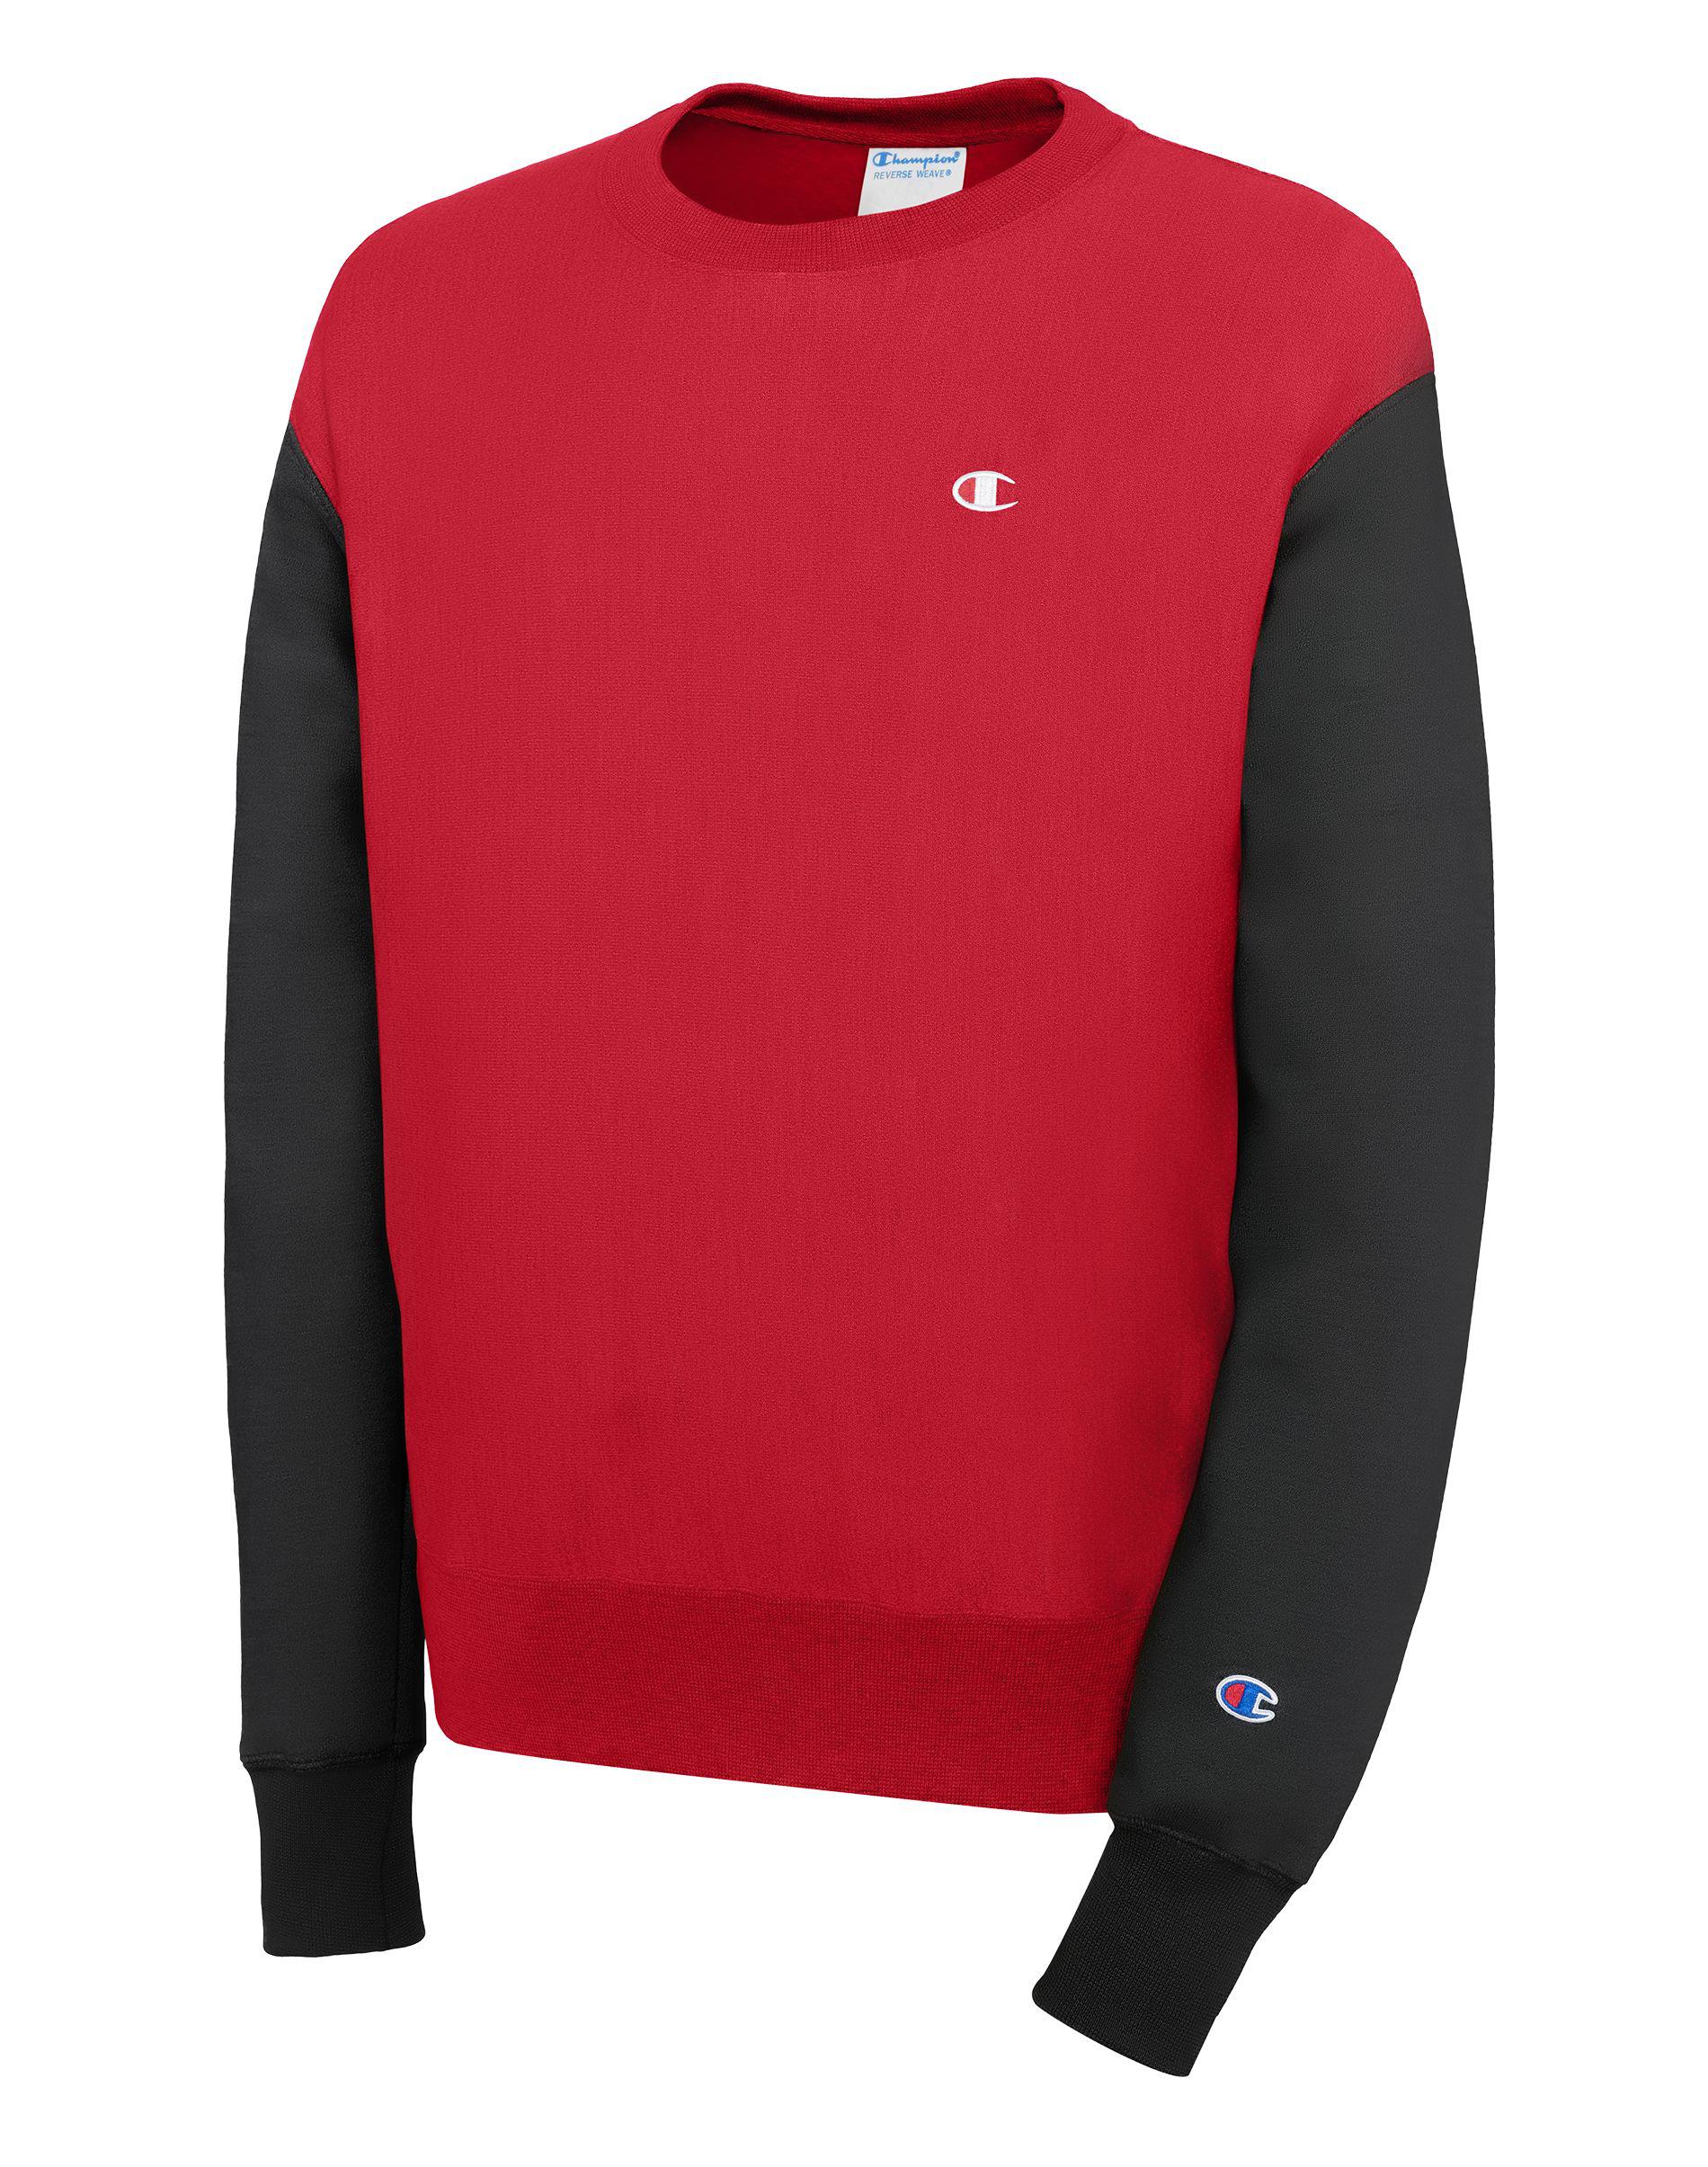 red and black champion sweatshirt